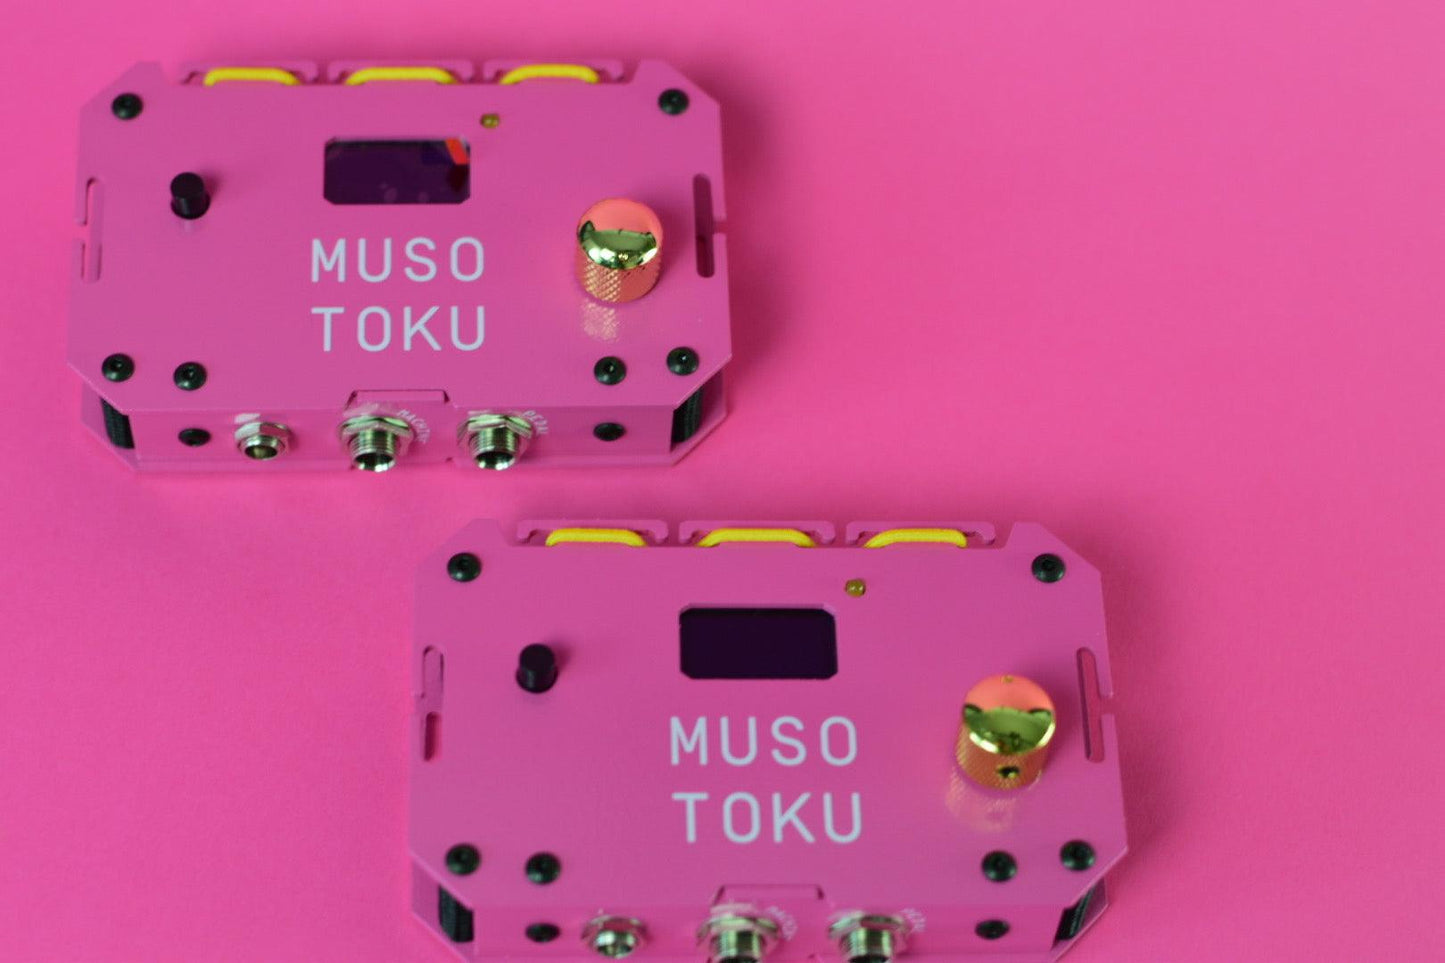 Musotoku Power Supply - Pink Gloss Edition - Tattoo Everything Supplies